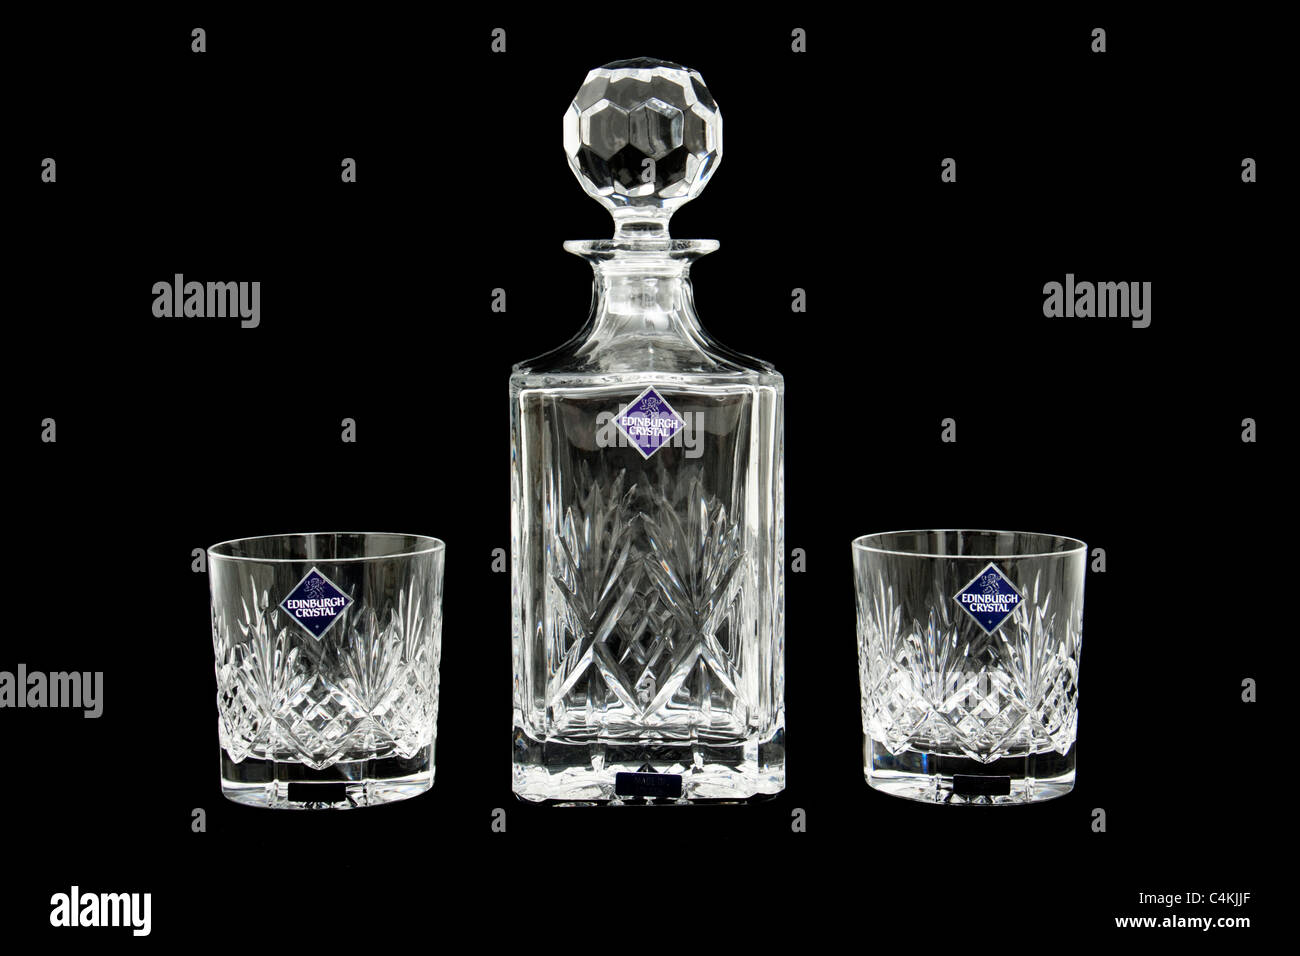 https://c8.alamy.com/compes/c4kjjf/edinburgh-crystal-whisky-vaso-decantador-y-establecer-c4kjjf.jpg